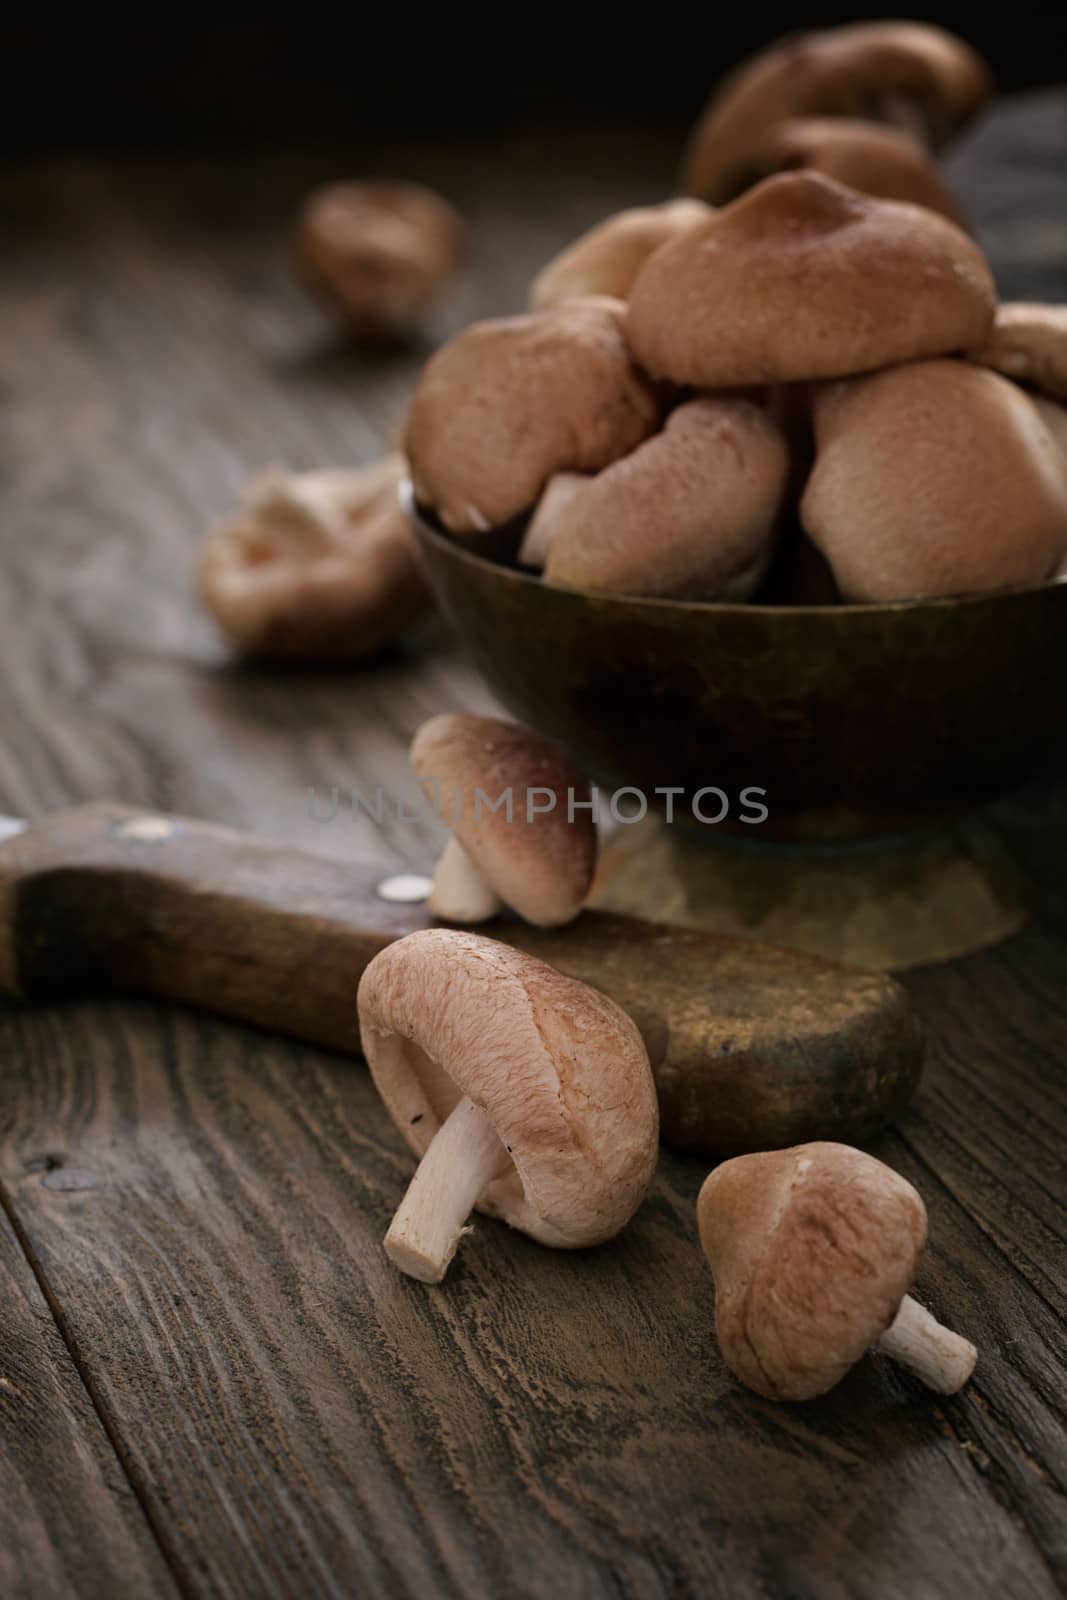 Shiitake mushrooms by mythja